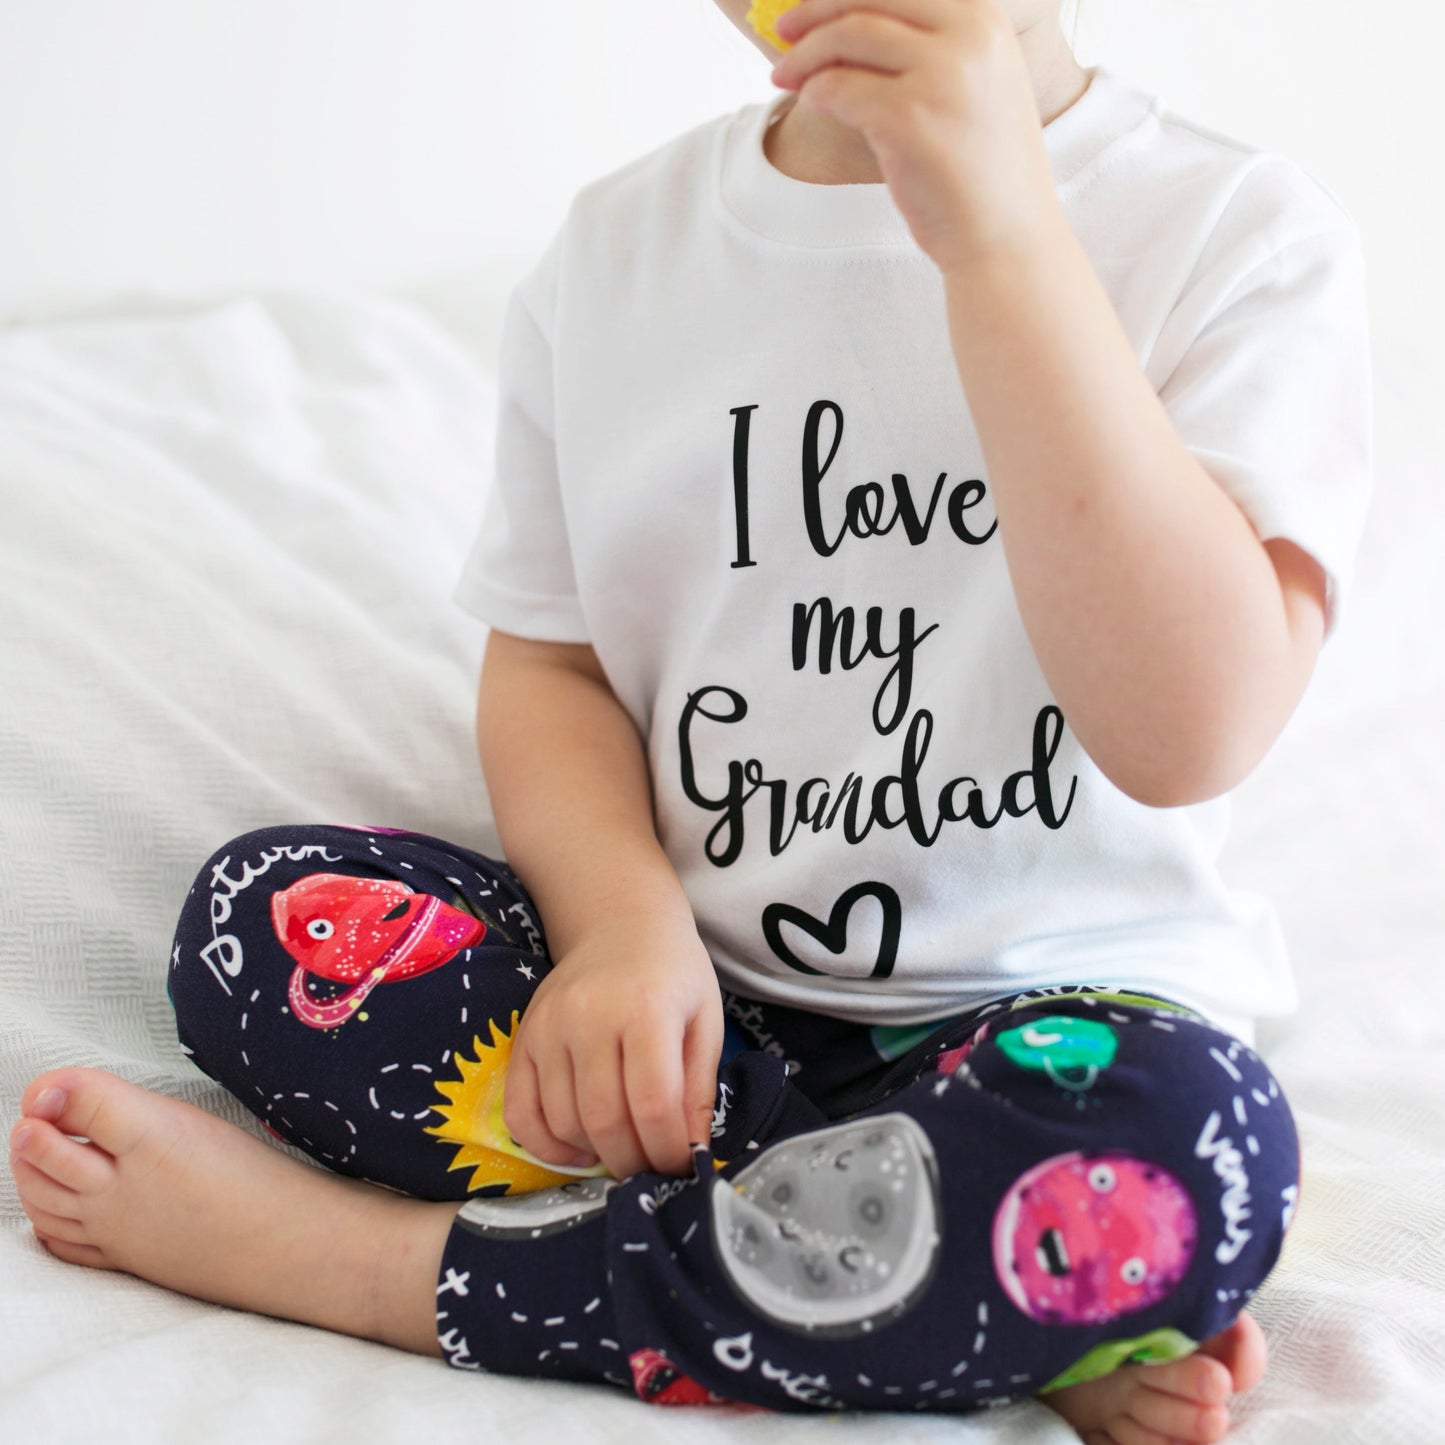 'I Love My Grandad' T-Shirt